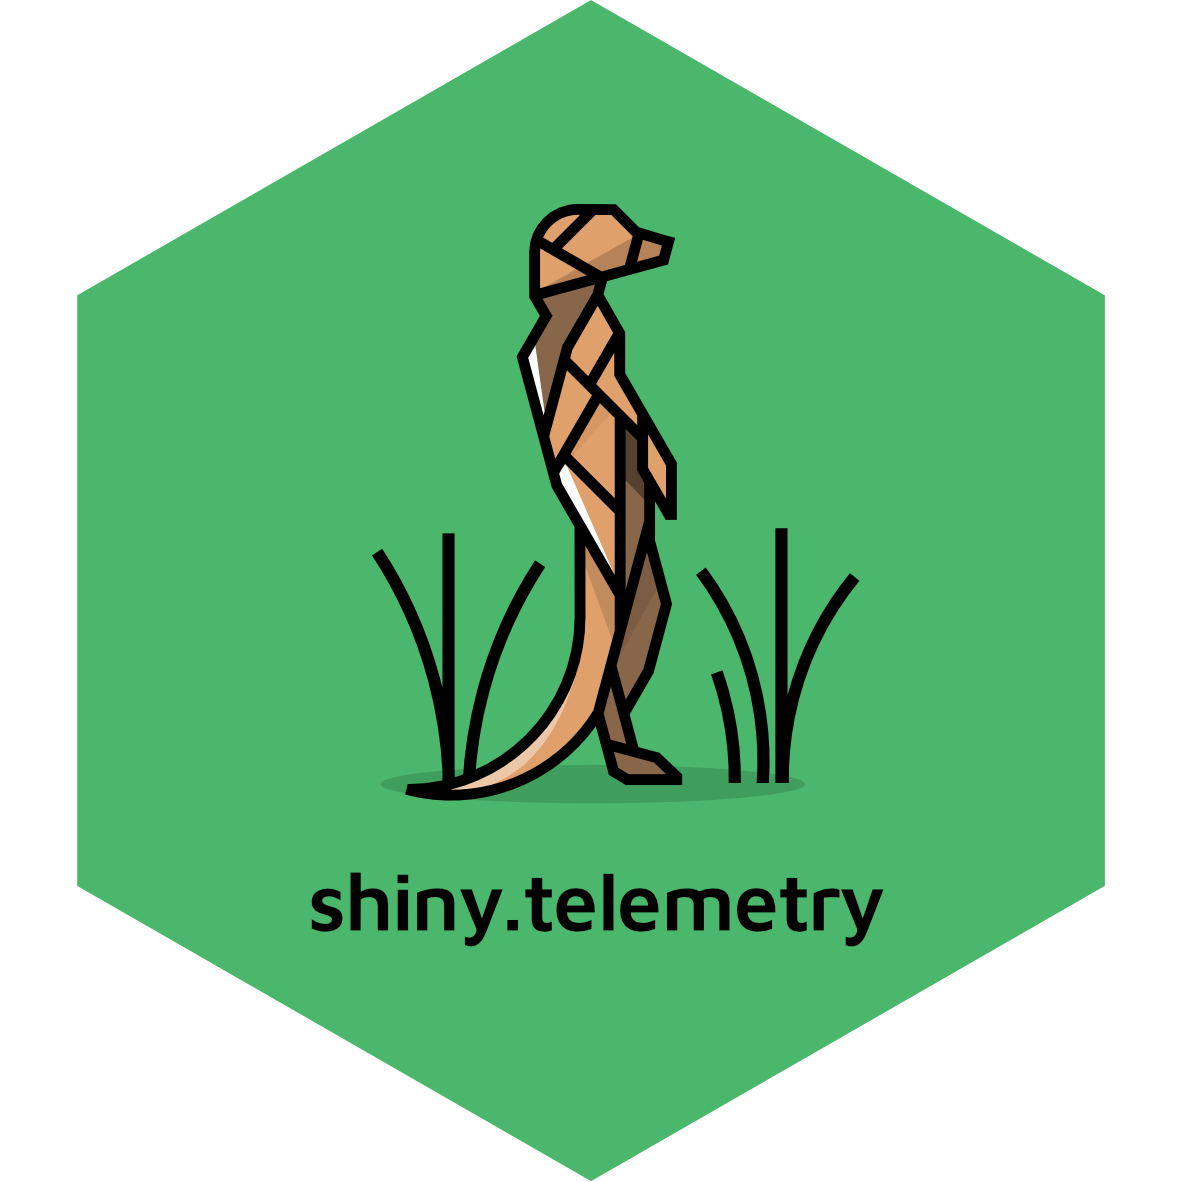 shiny.telemetry logo